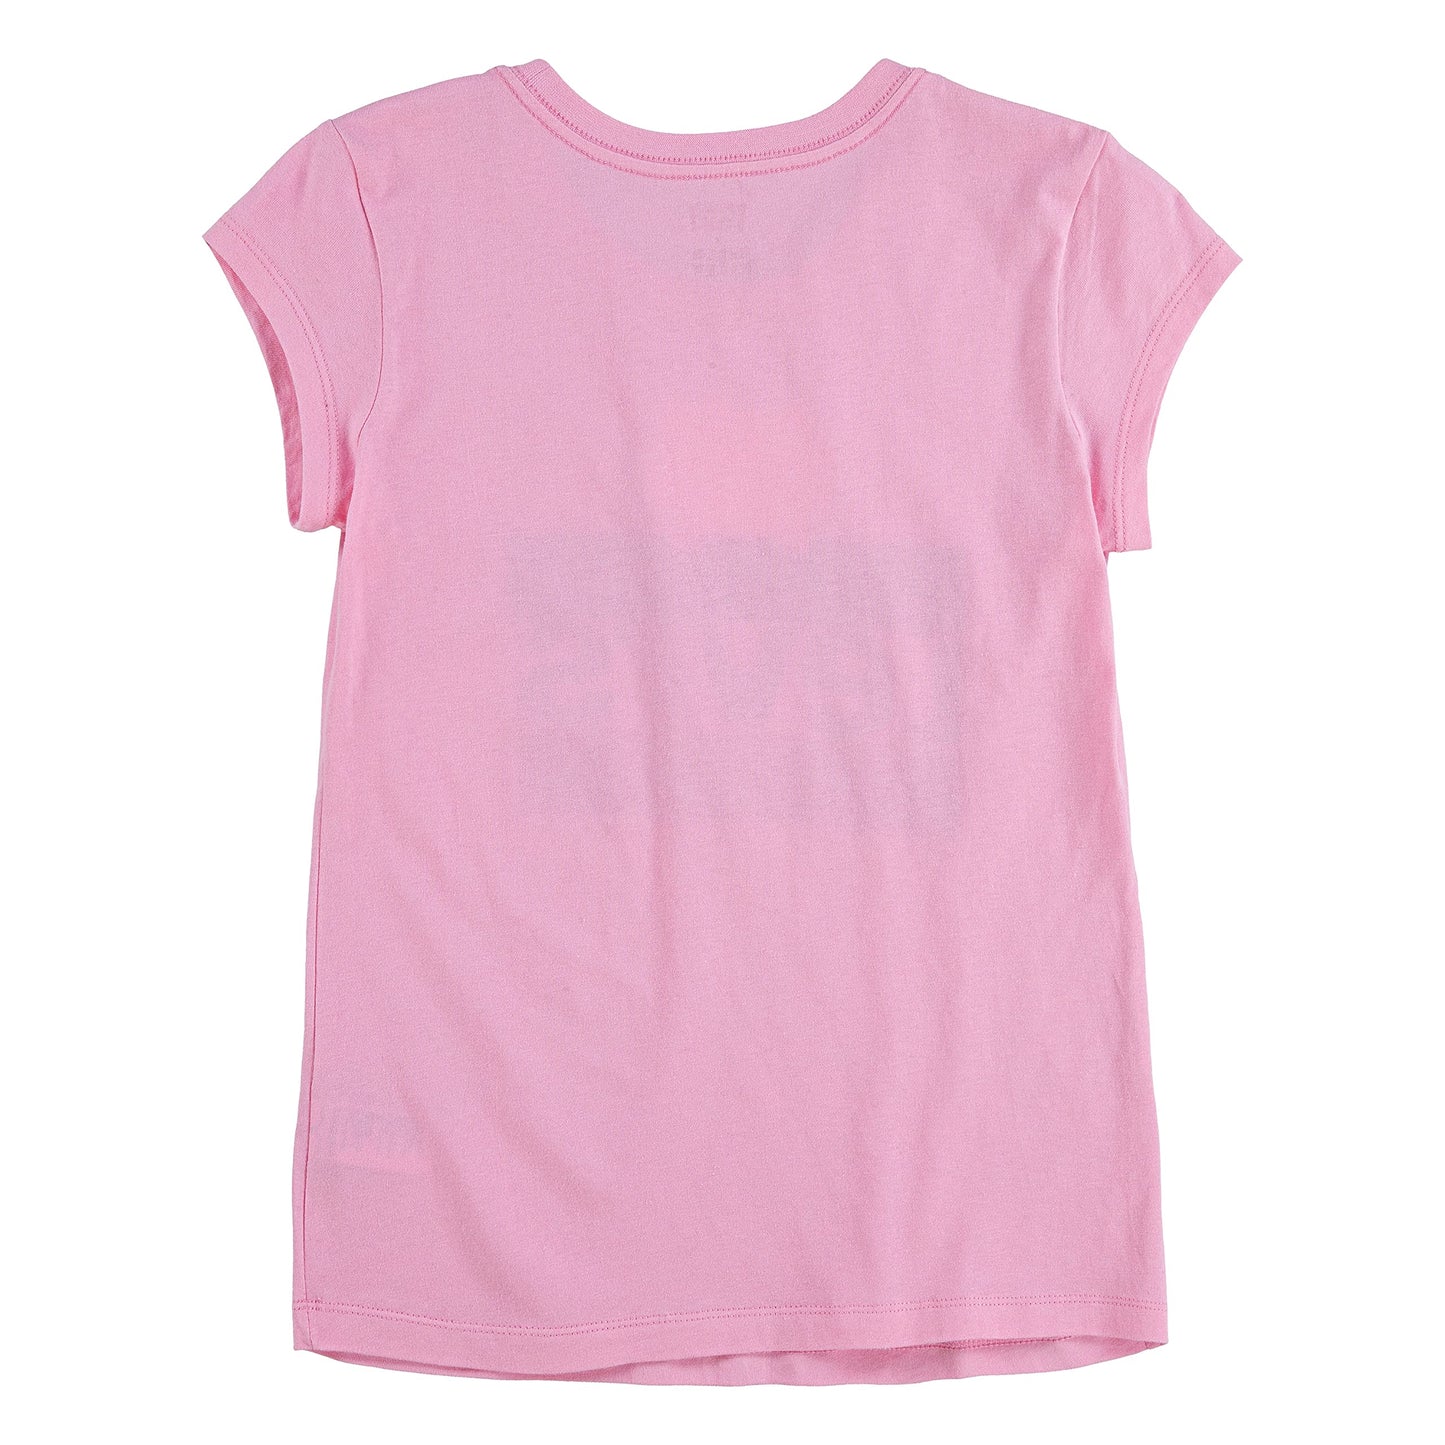 Image 2 of Levi's® x Hello Kitty® T-Shirt (Little Kids)